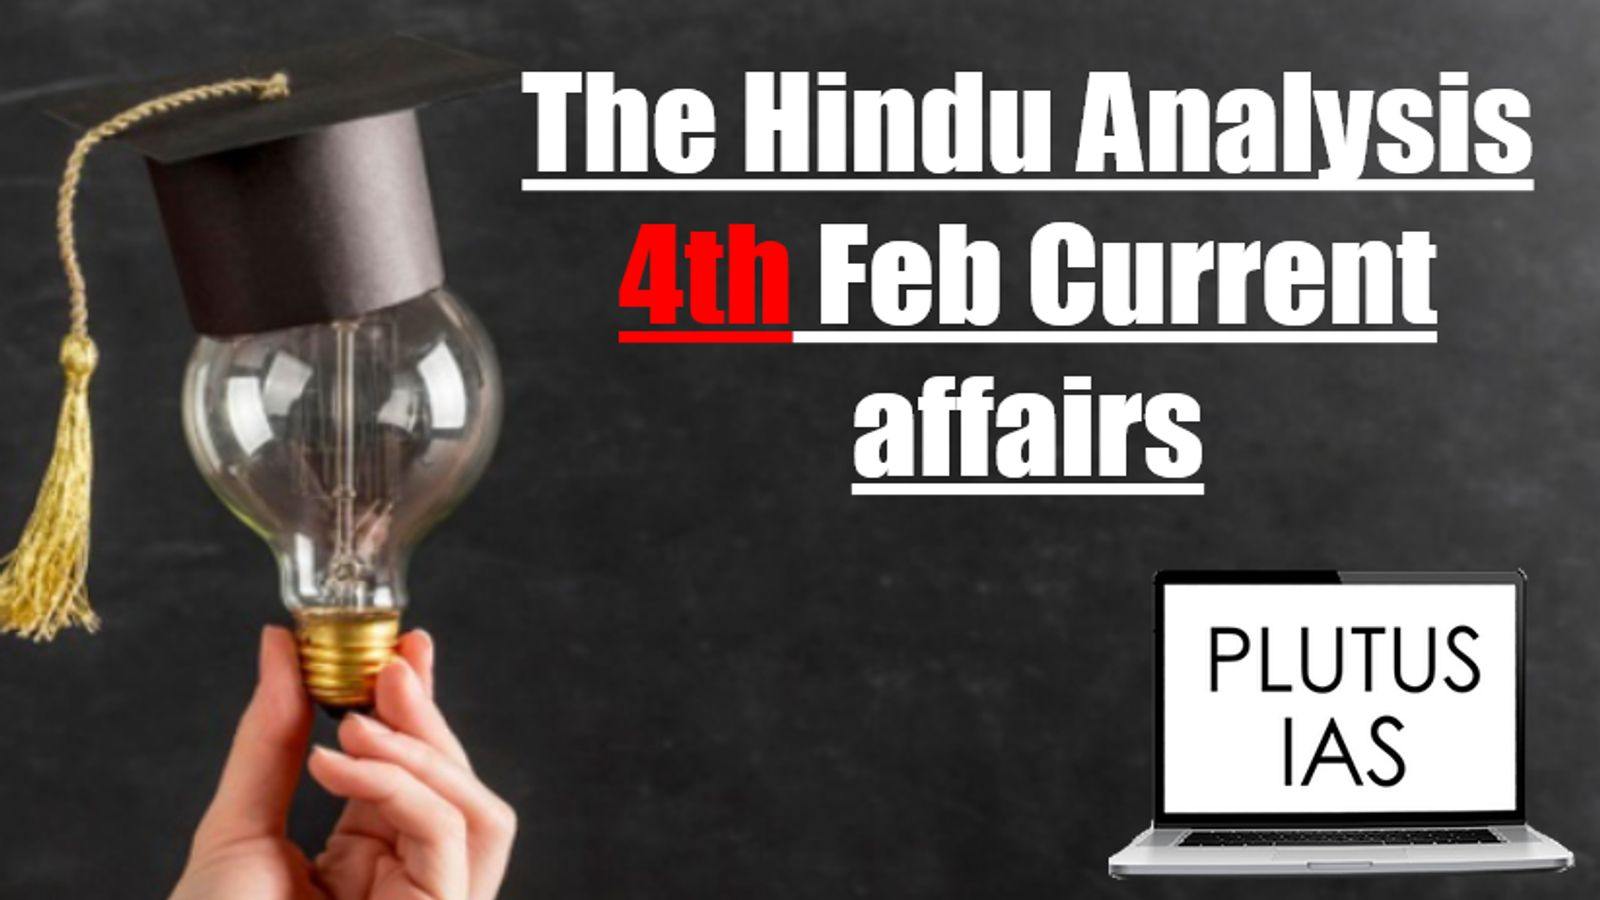 The Hindu Analysis 4th February